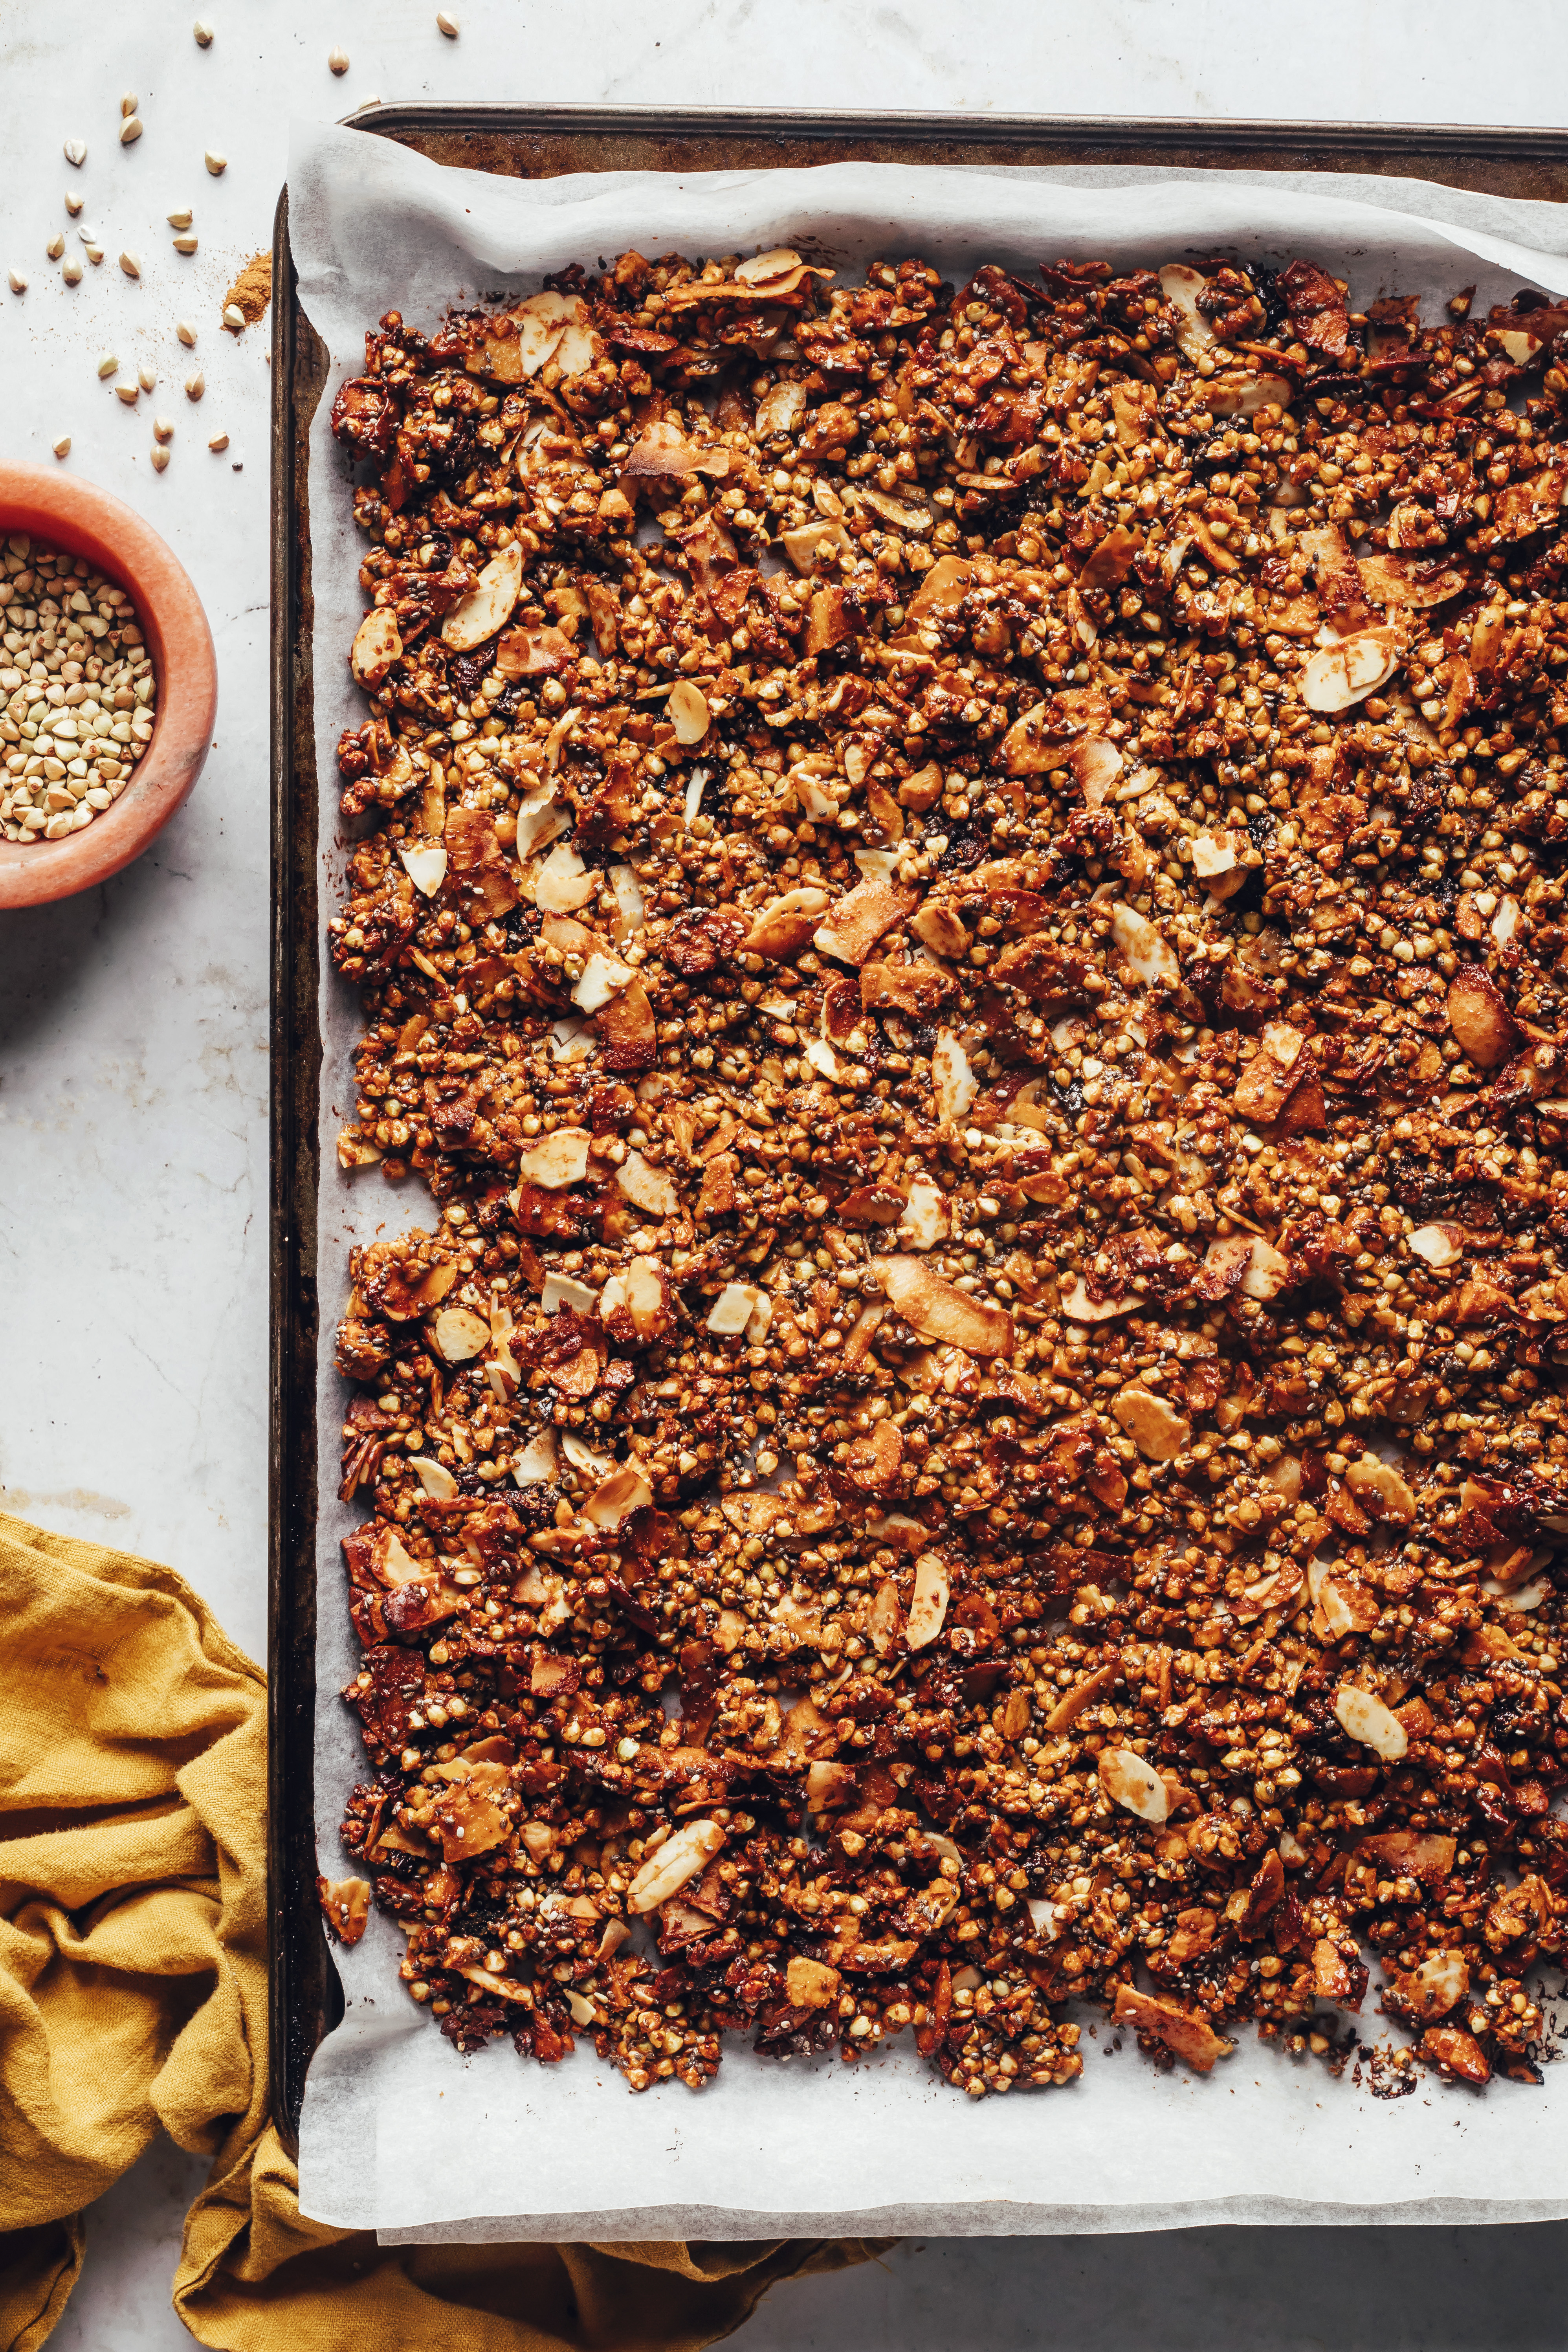 Small bowl of buckwheat next to a baking tray of gluten-free granola